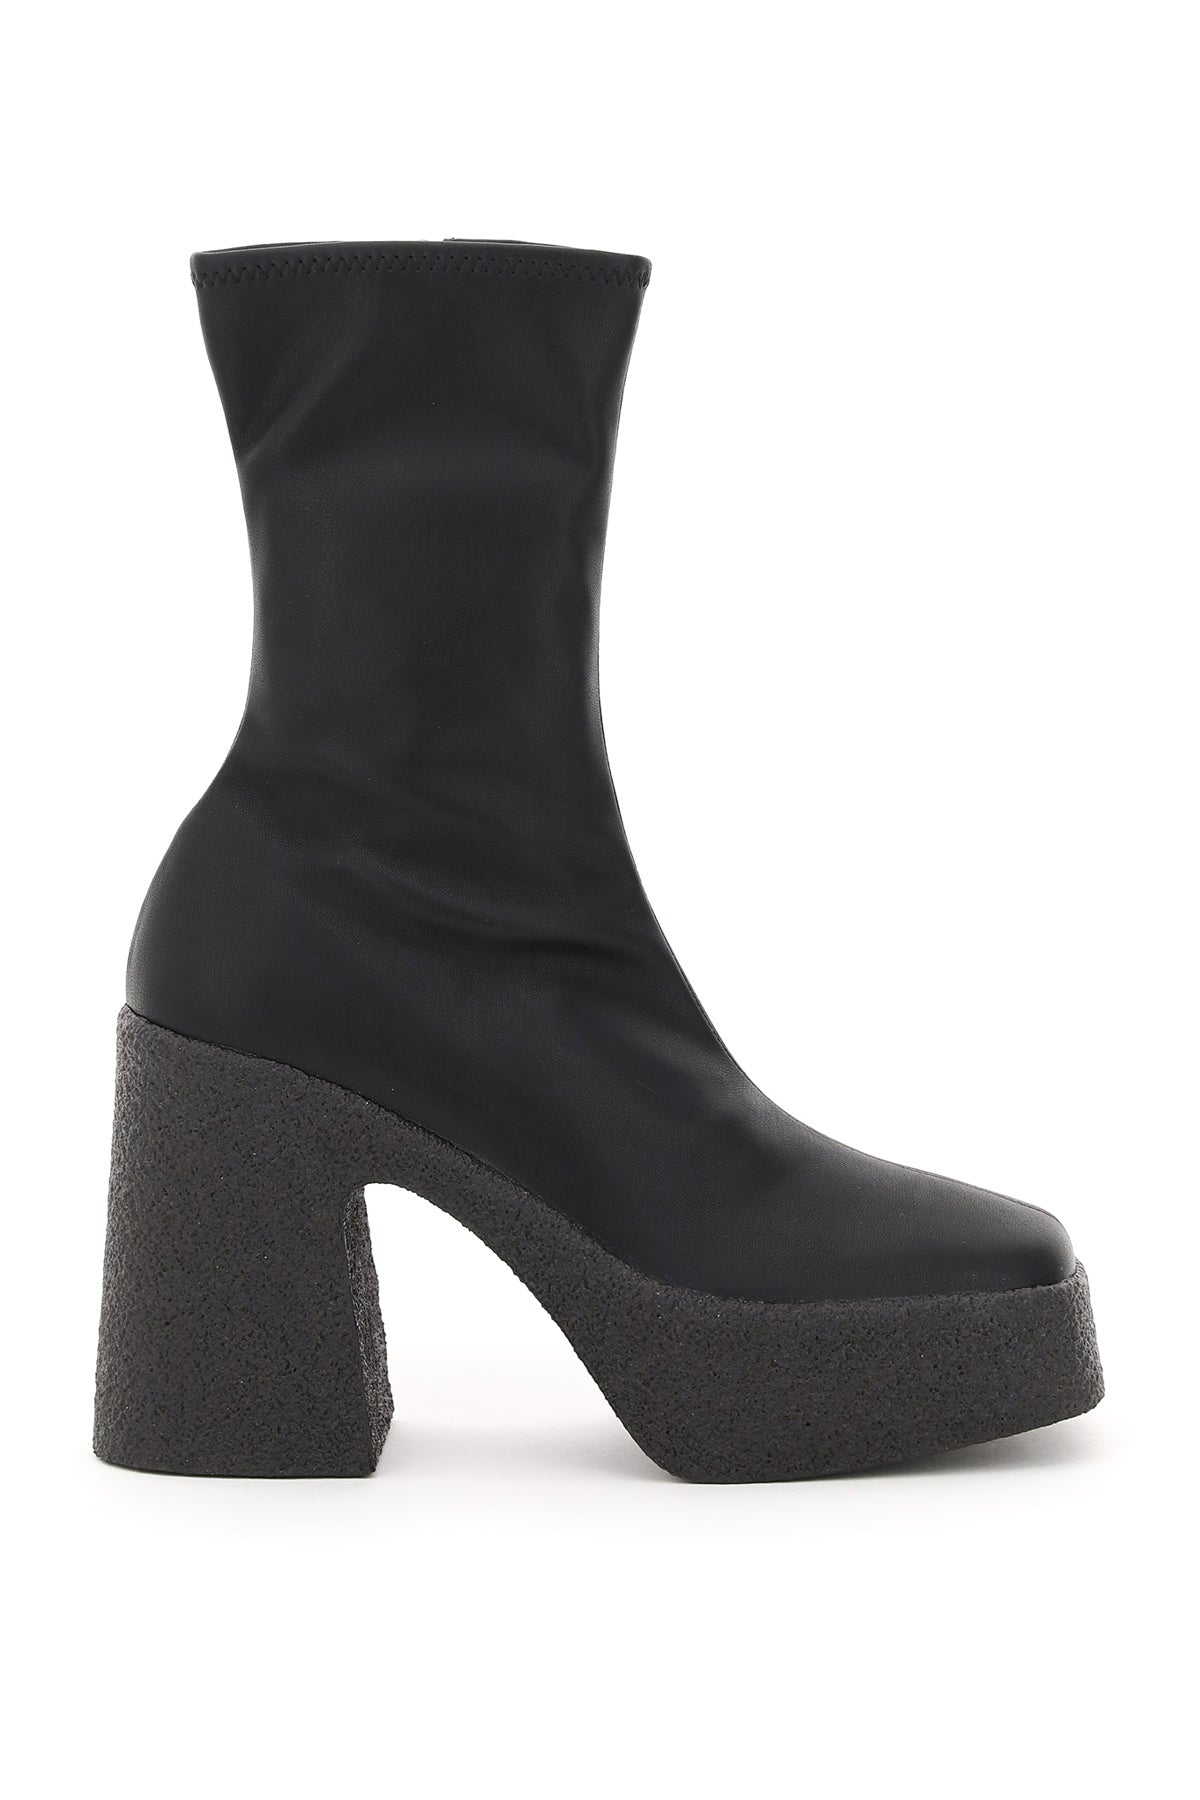 Stella mccartney thick heel stretch boots-0